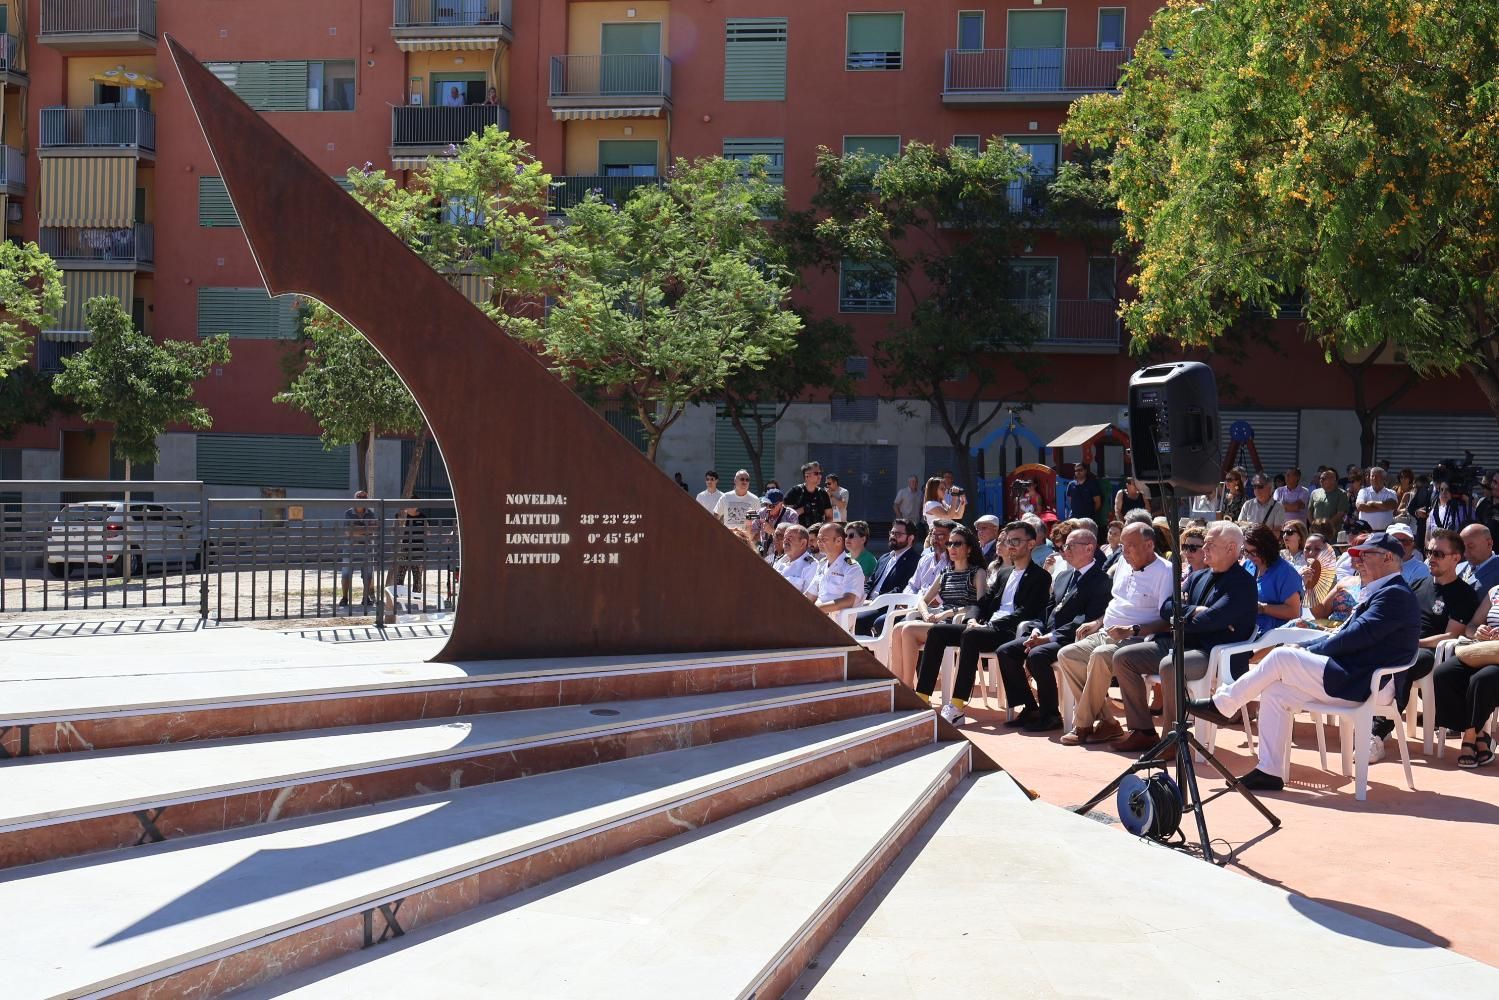 Novelda inaugura un reloj solar monumental dedicado a Jorge Juan